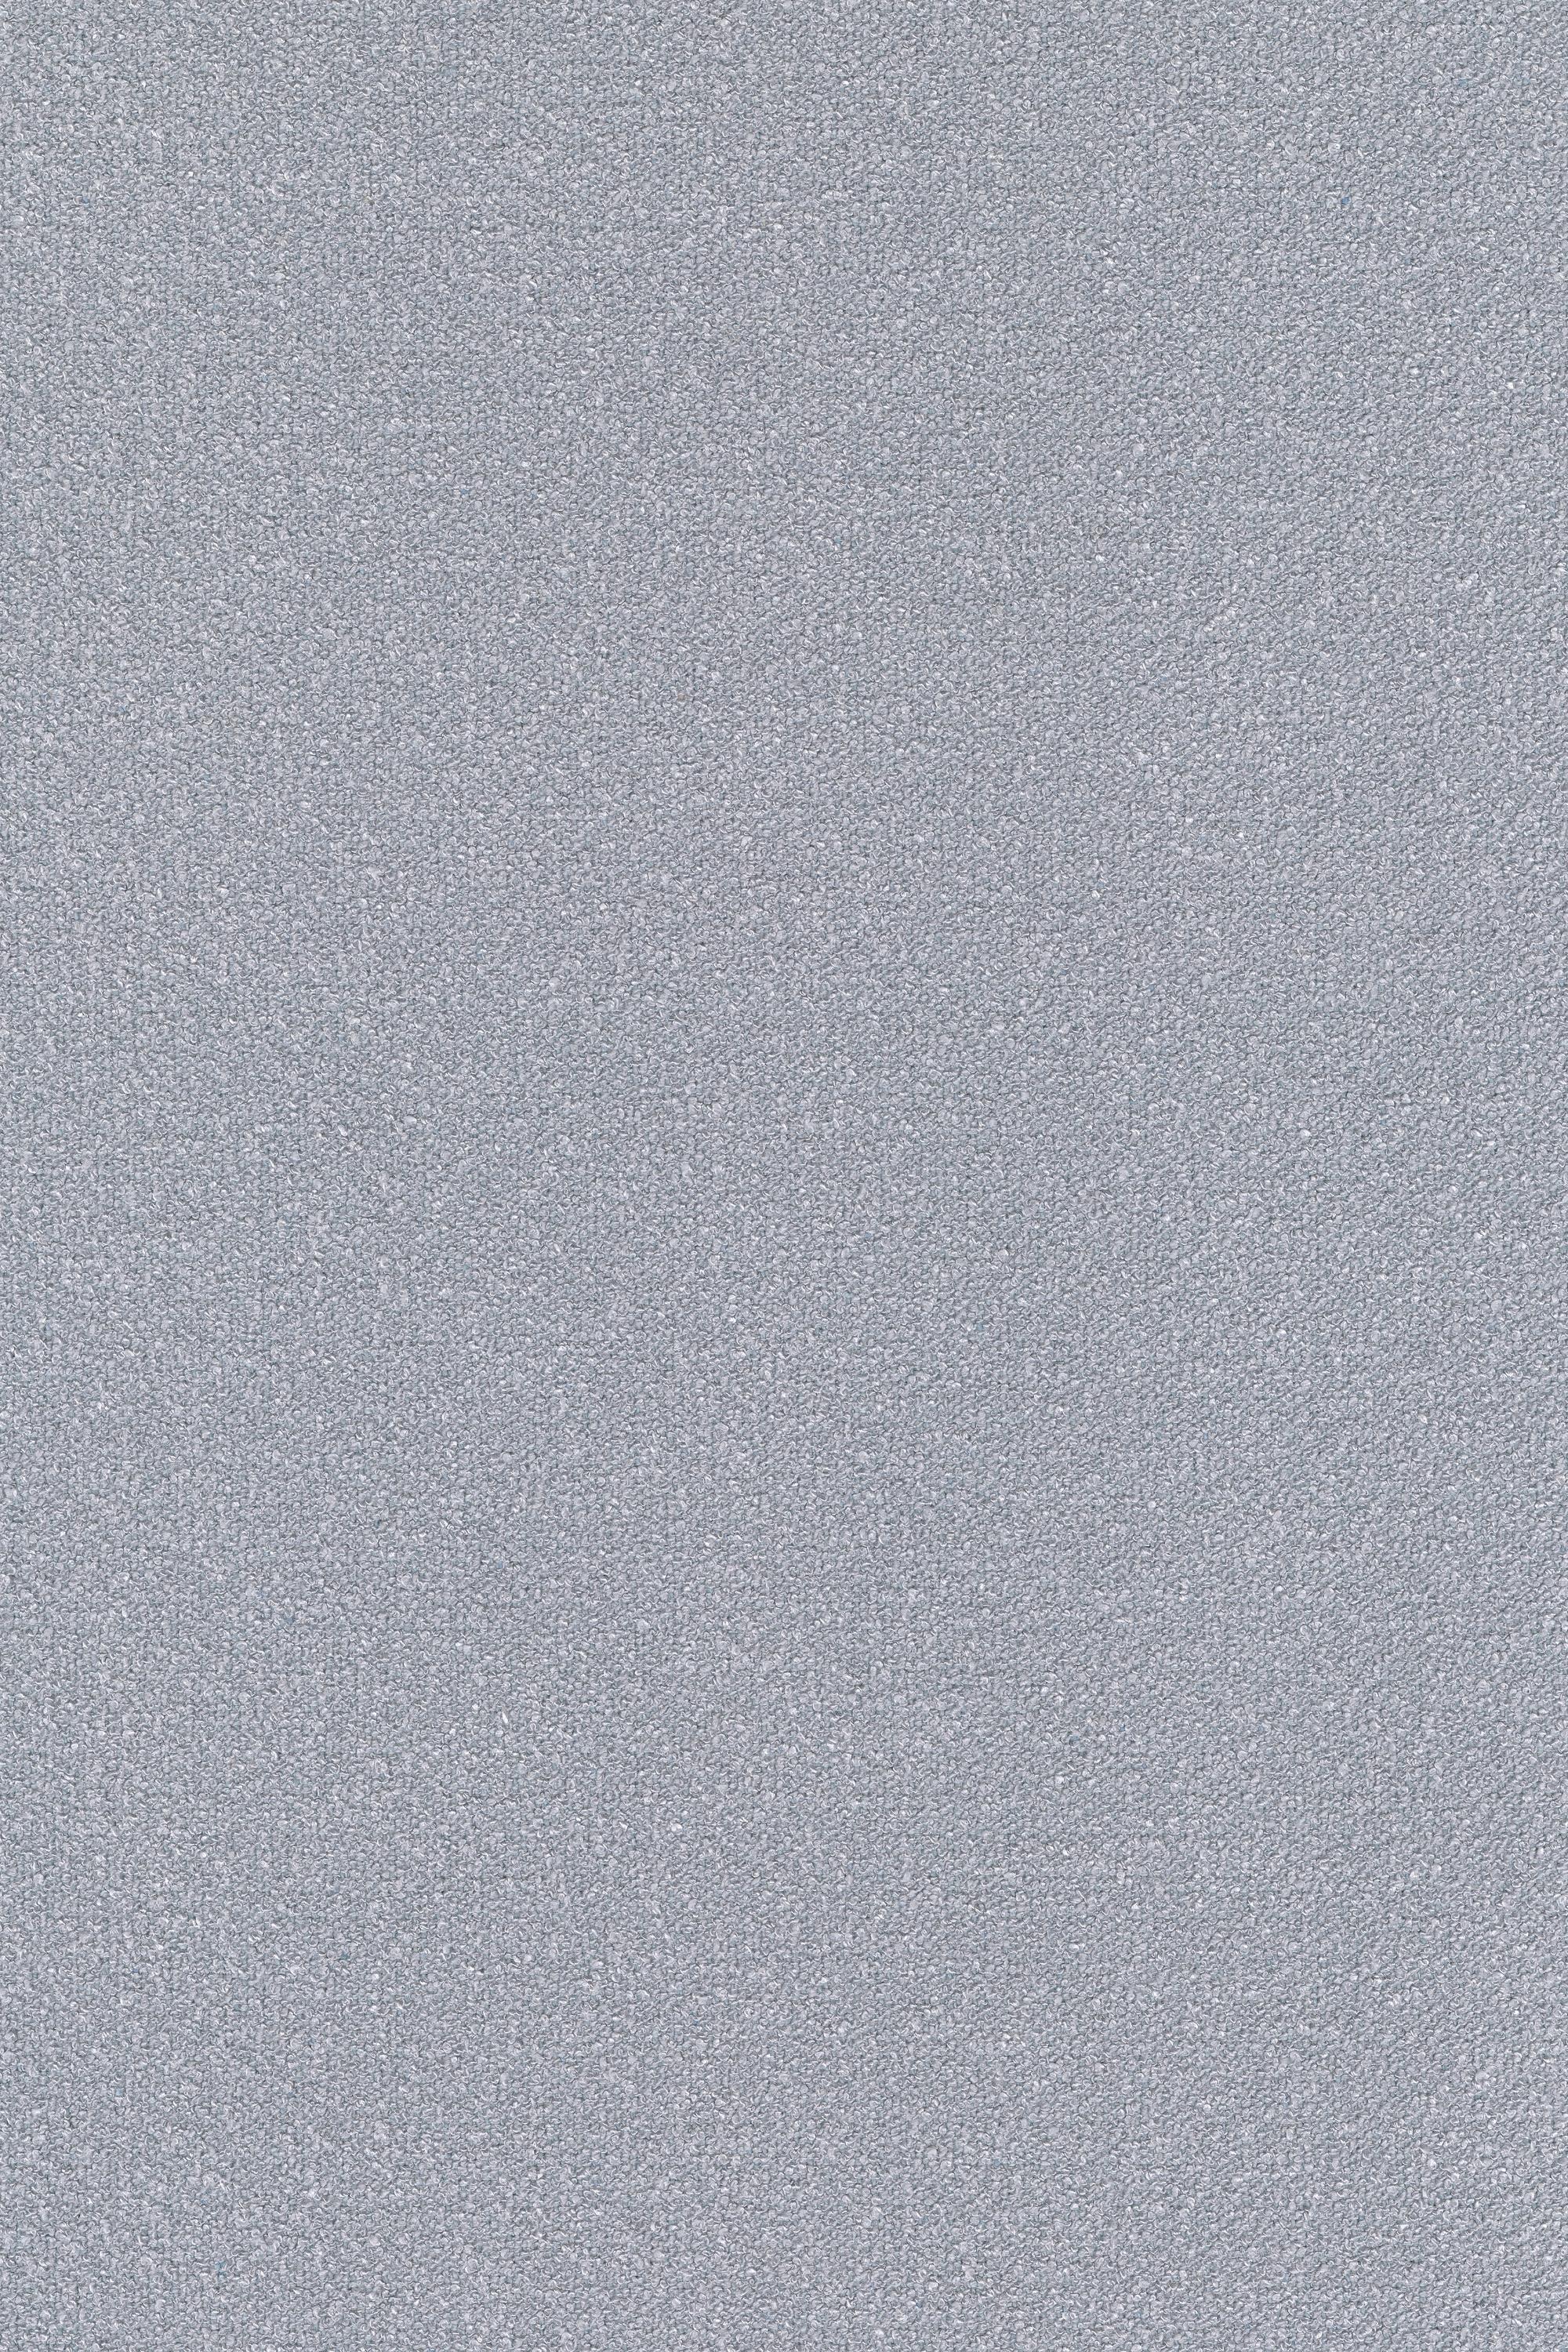 Kvadrat Acca Upholstery Fabric 0731